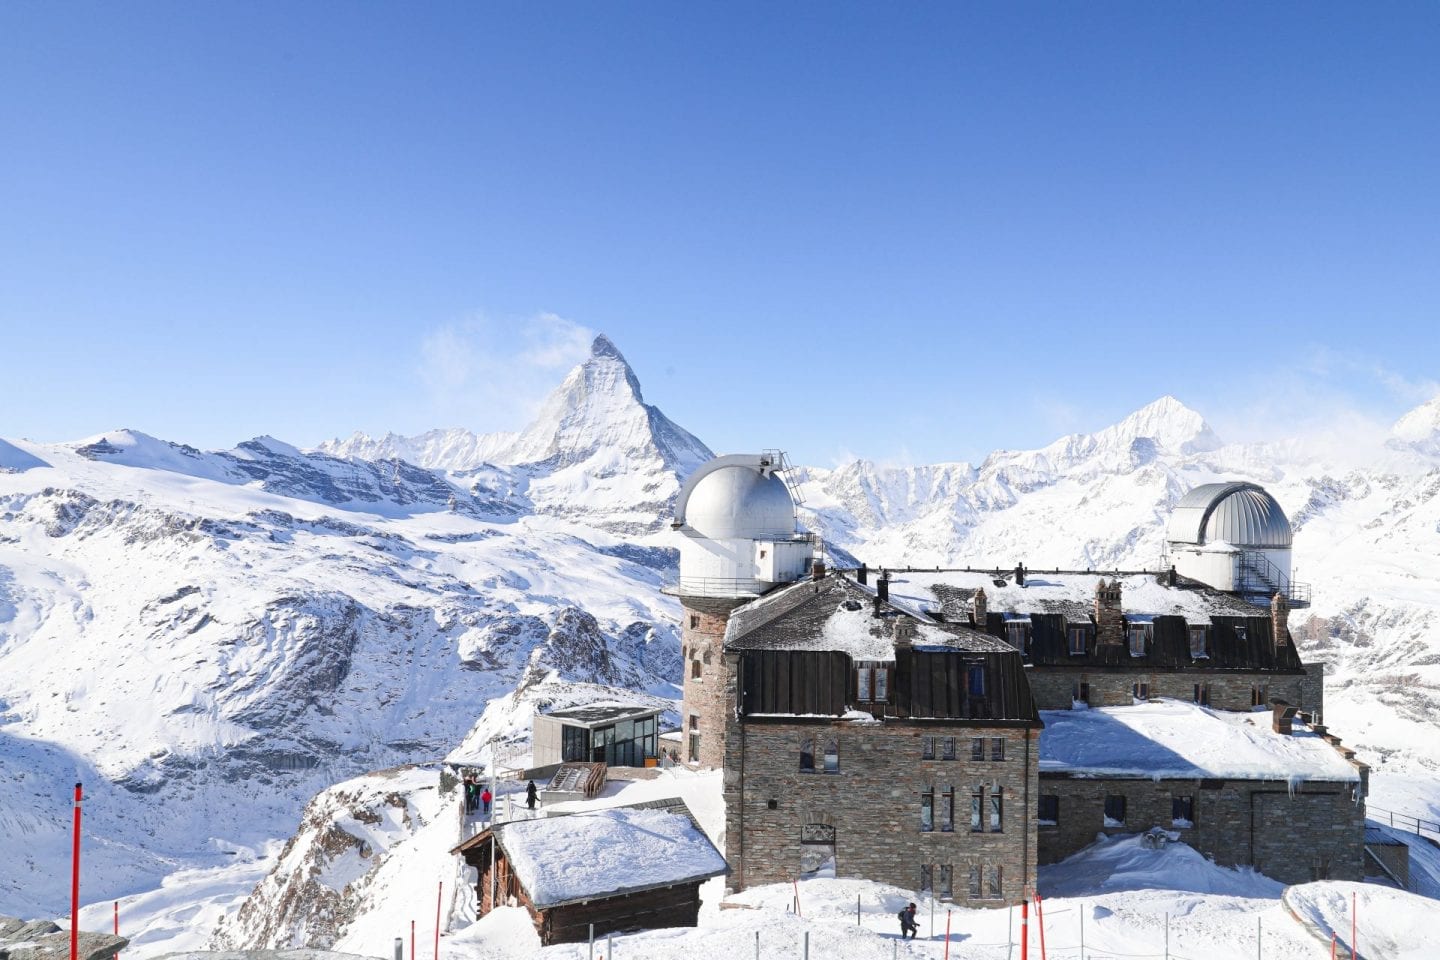 A Solo Snowy Switzerland Adventure